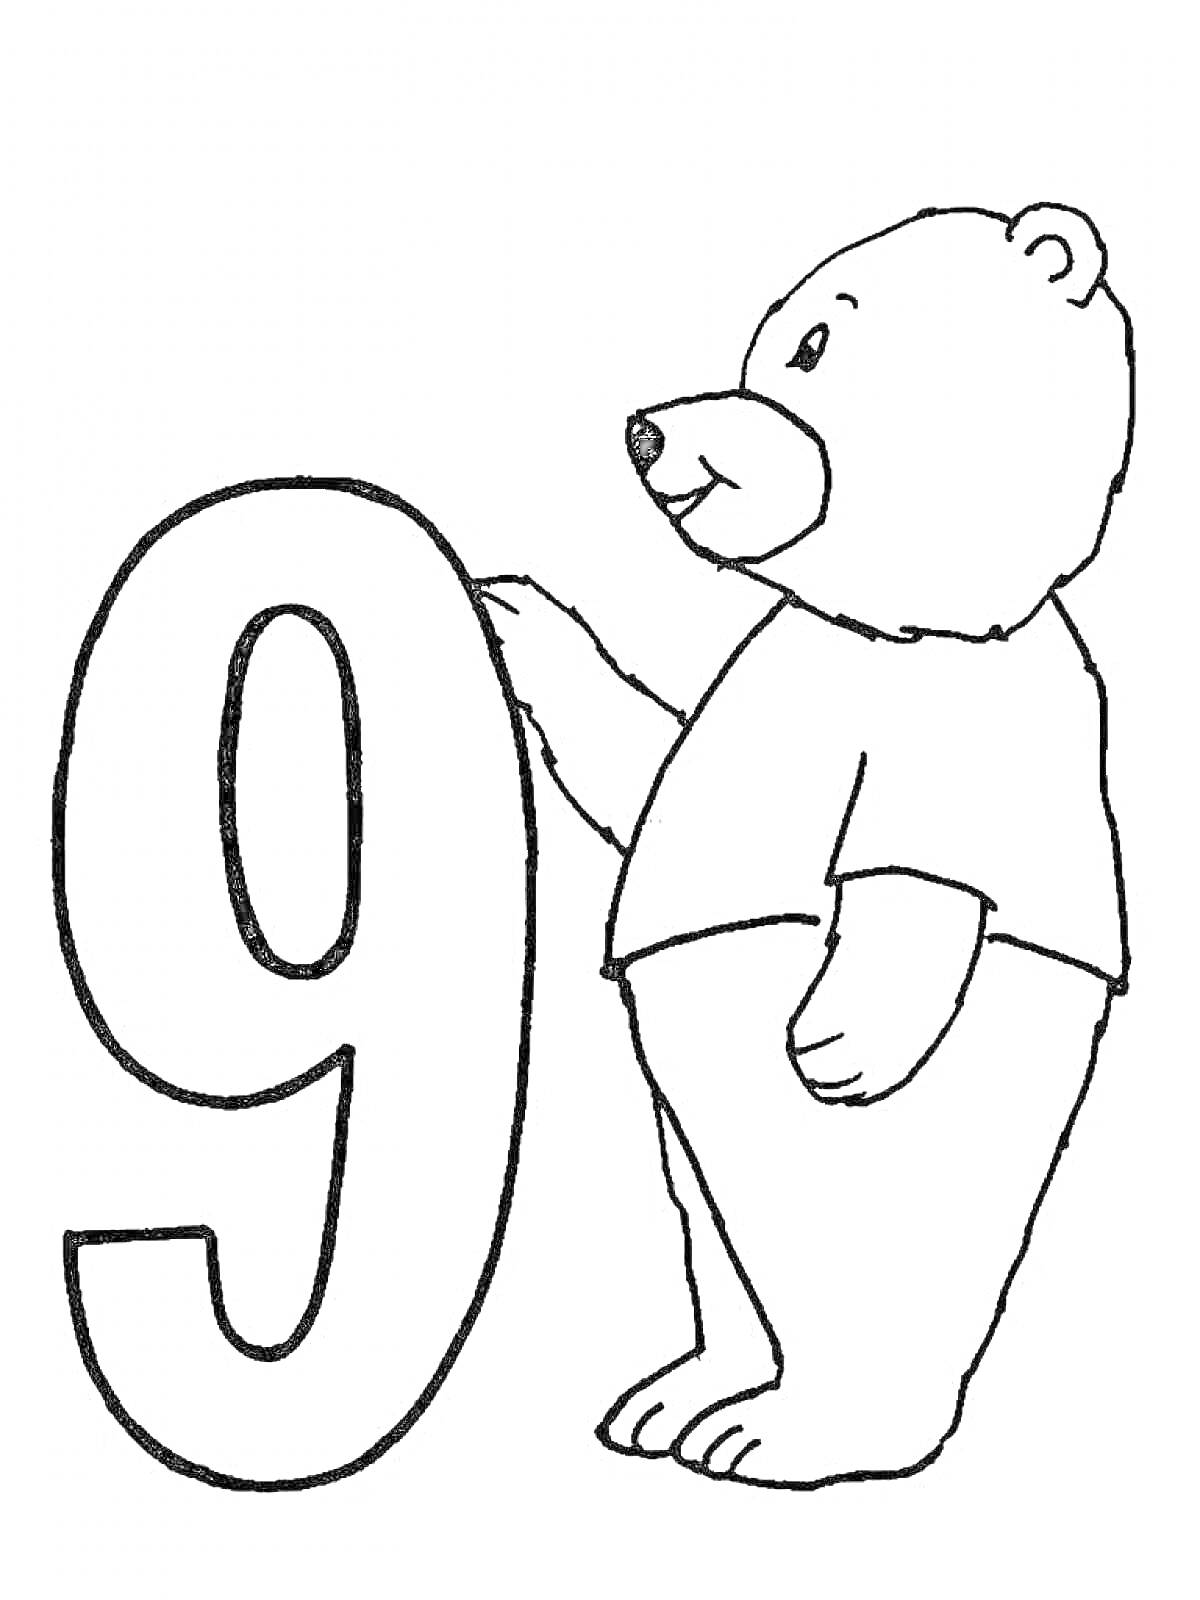 На раскраске изображено: Медведь, Цифра 9, Цифры, Контурные рисунки